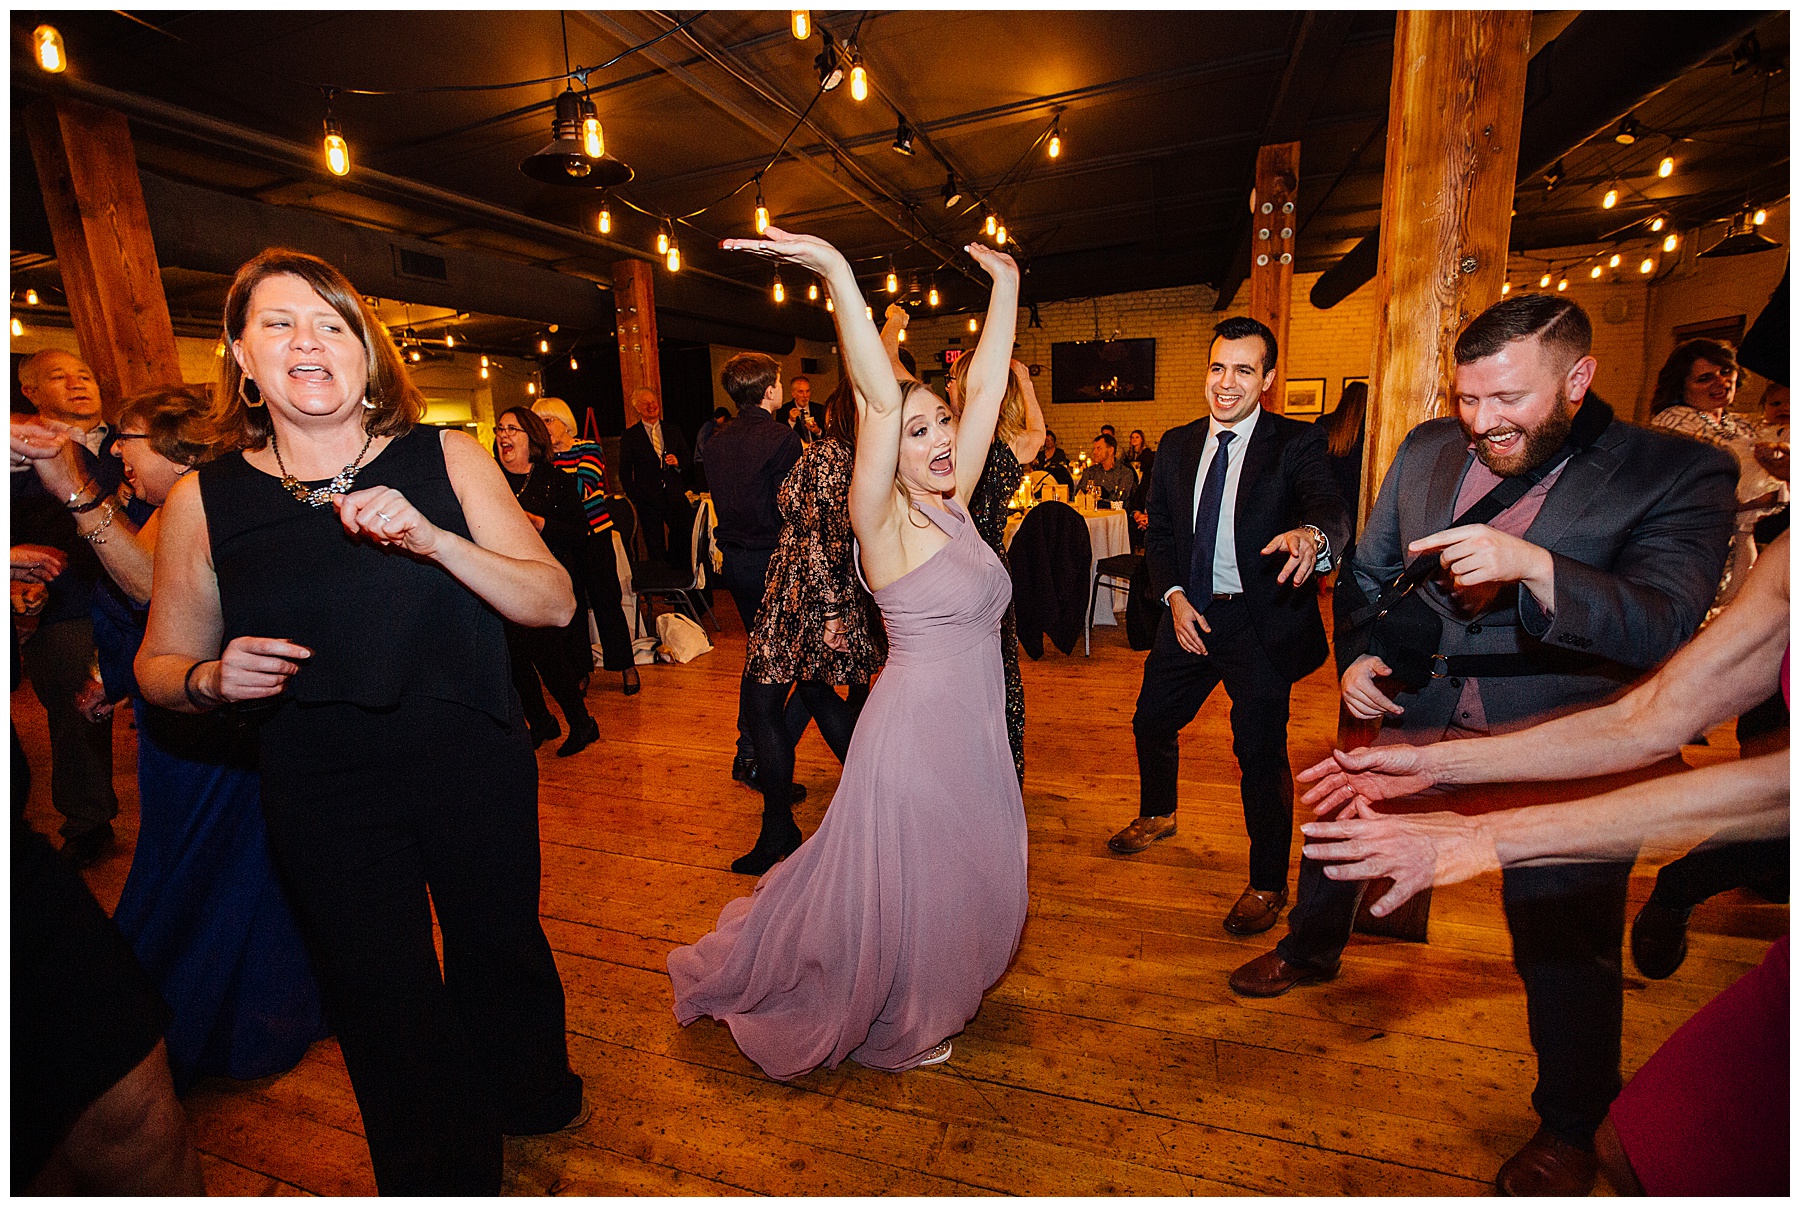 Dancing at Old Mattress factory wedding reception